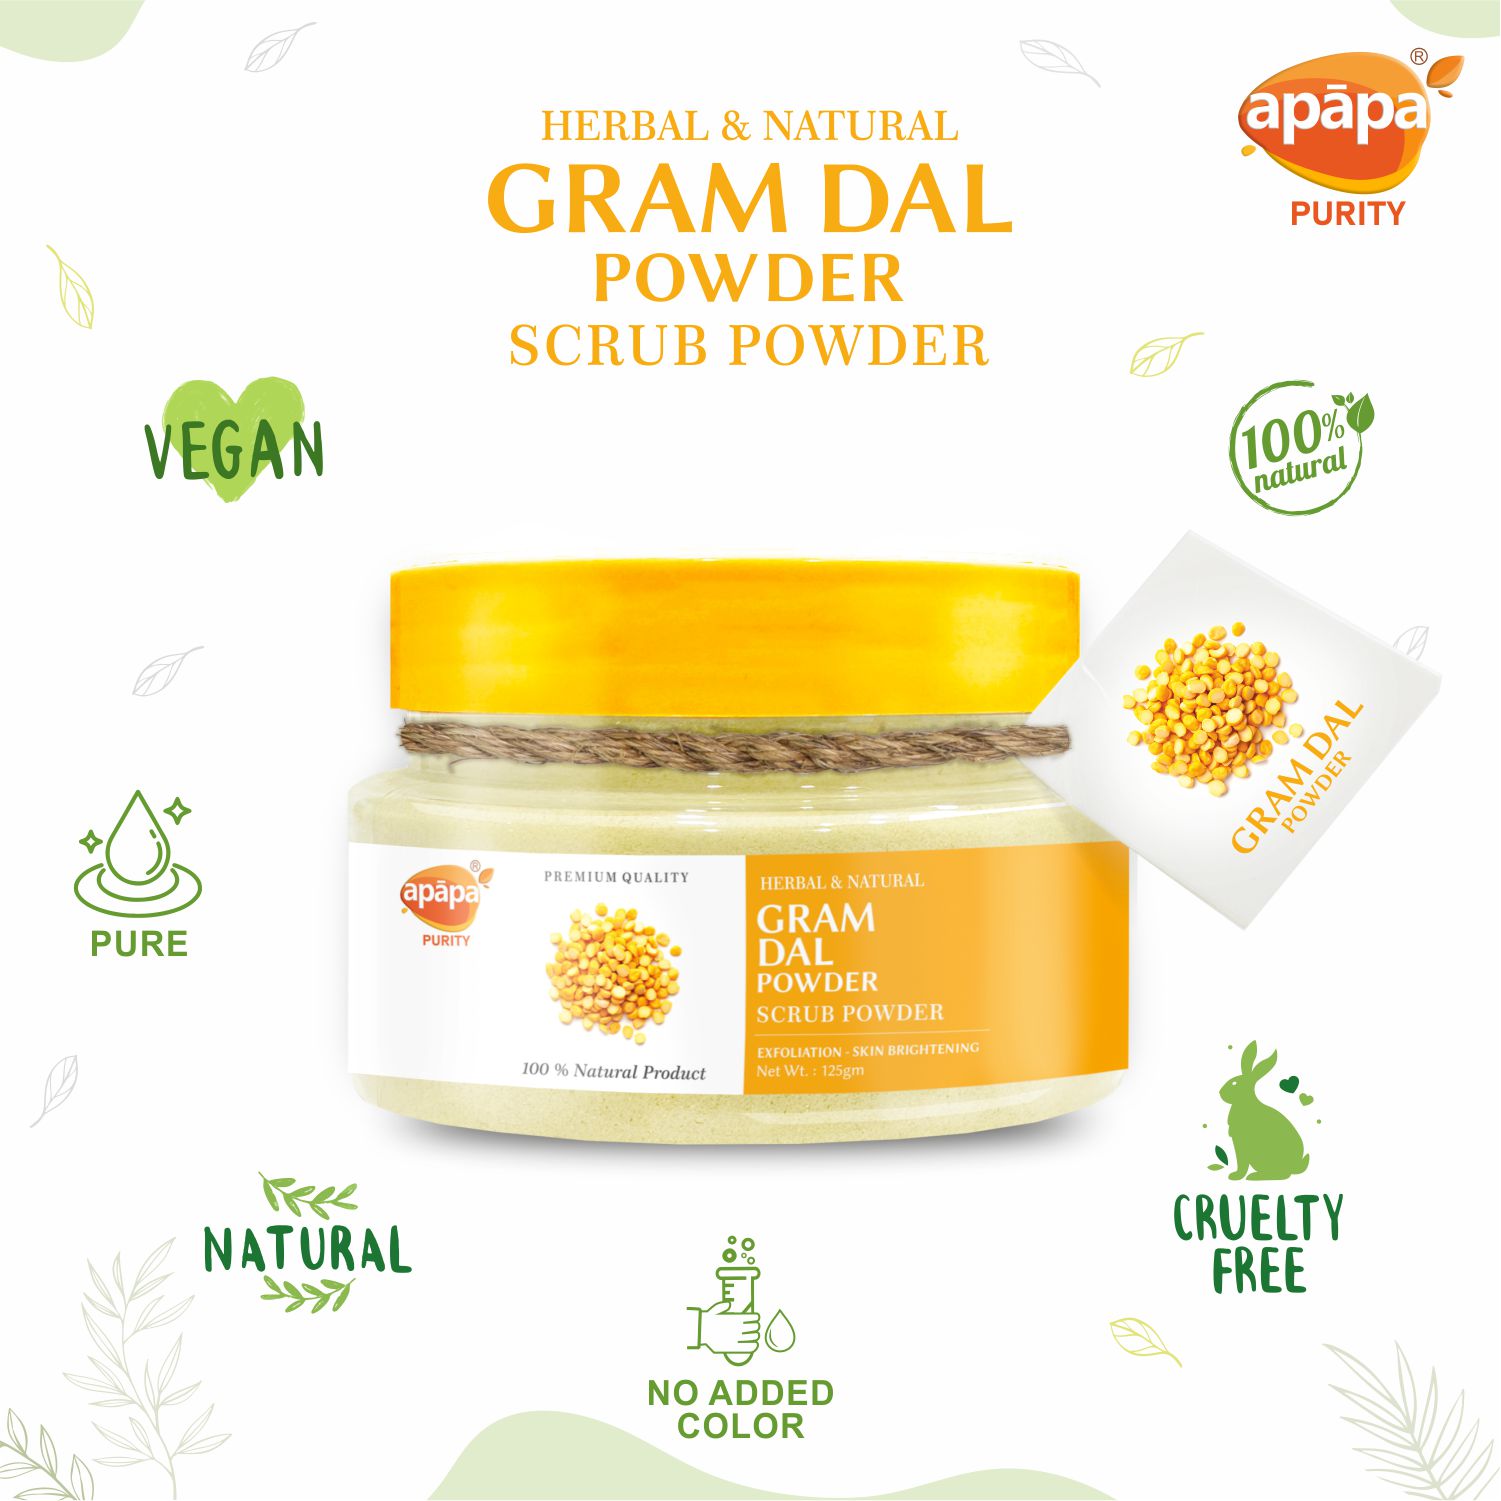 APĀPA Gram Dal Scrub Powder for Skin